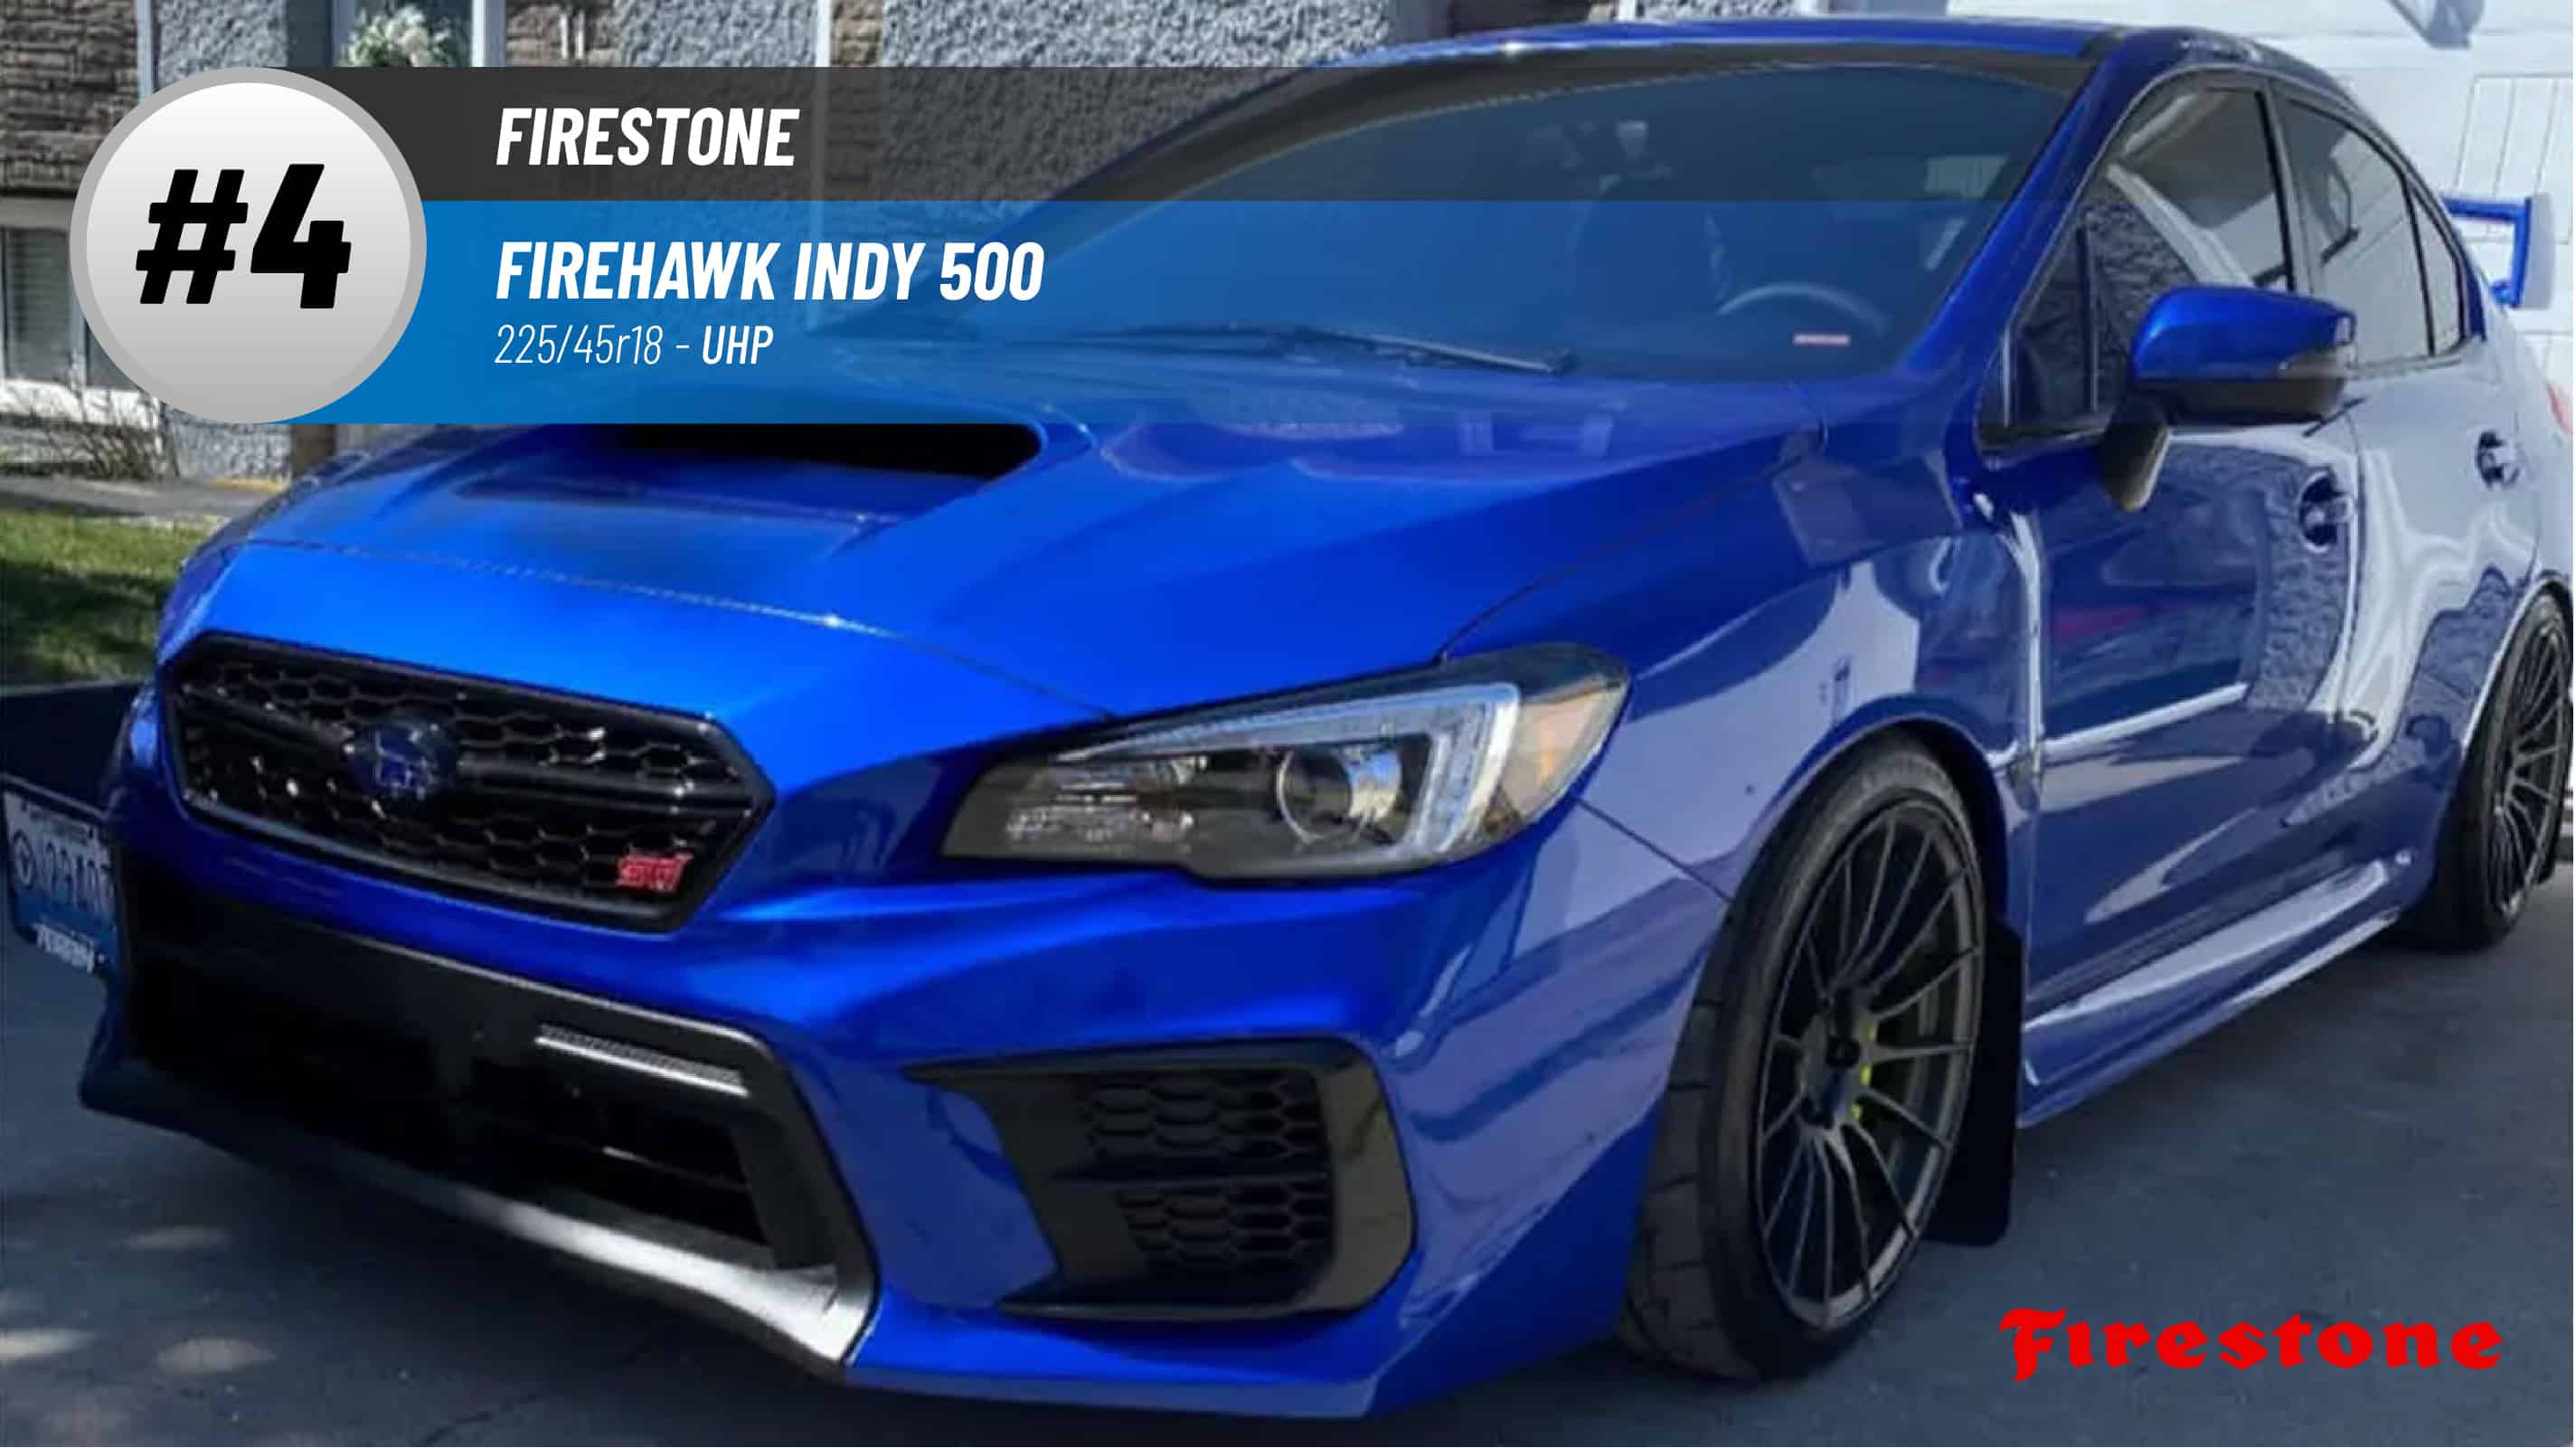 Top #4 UHP Tires: Firestone Firehawk Indy 500 – 225/45r18